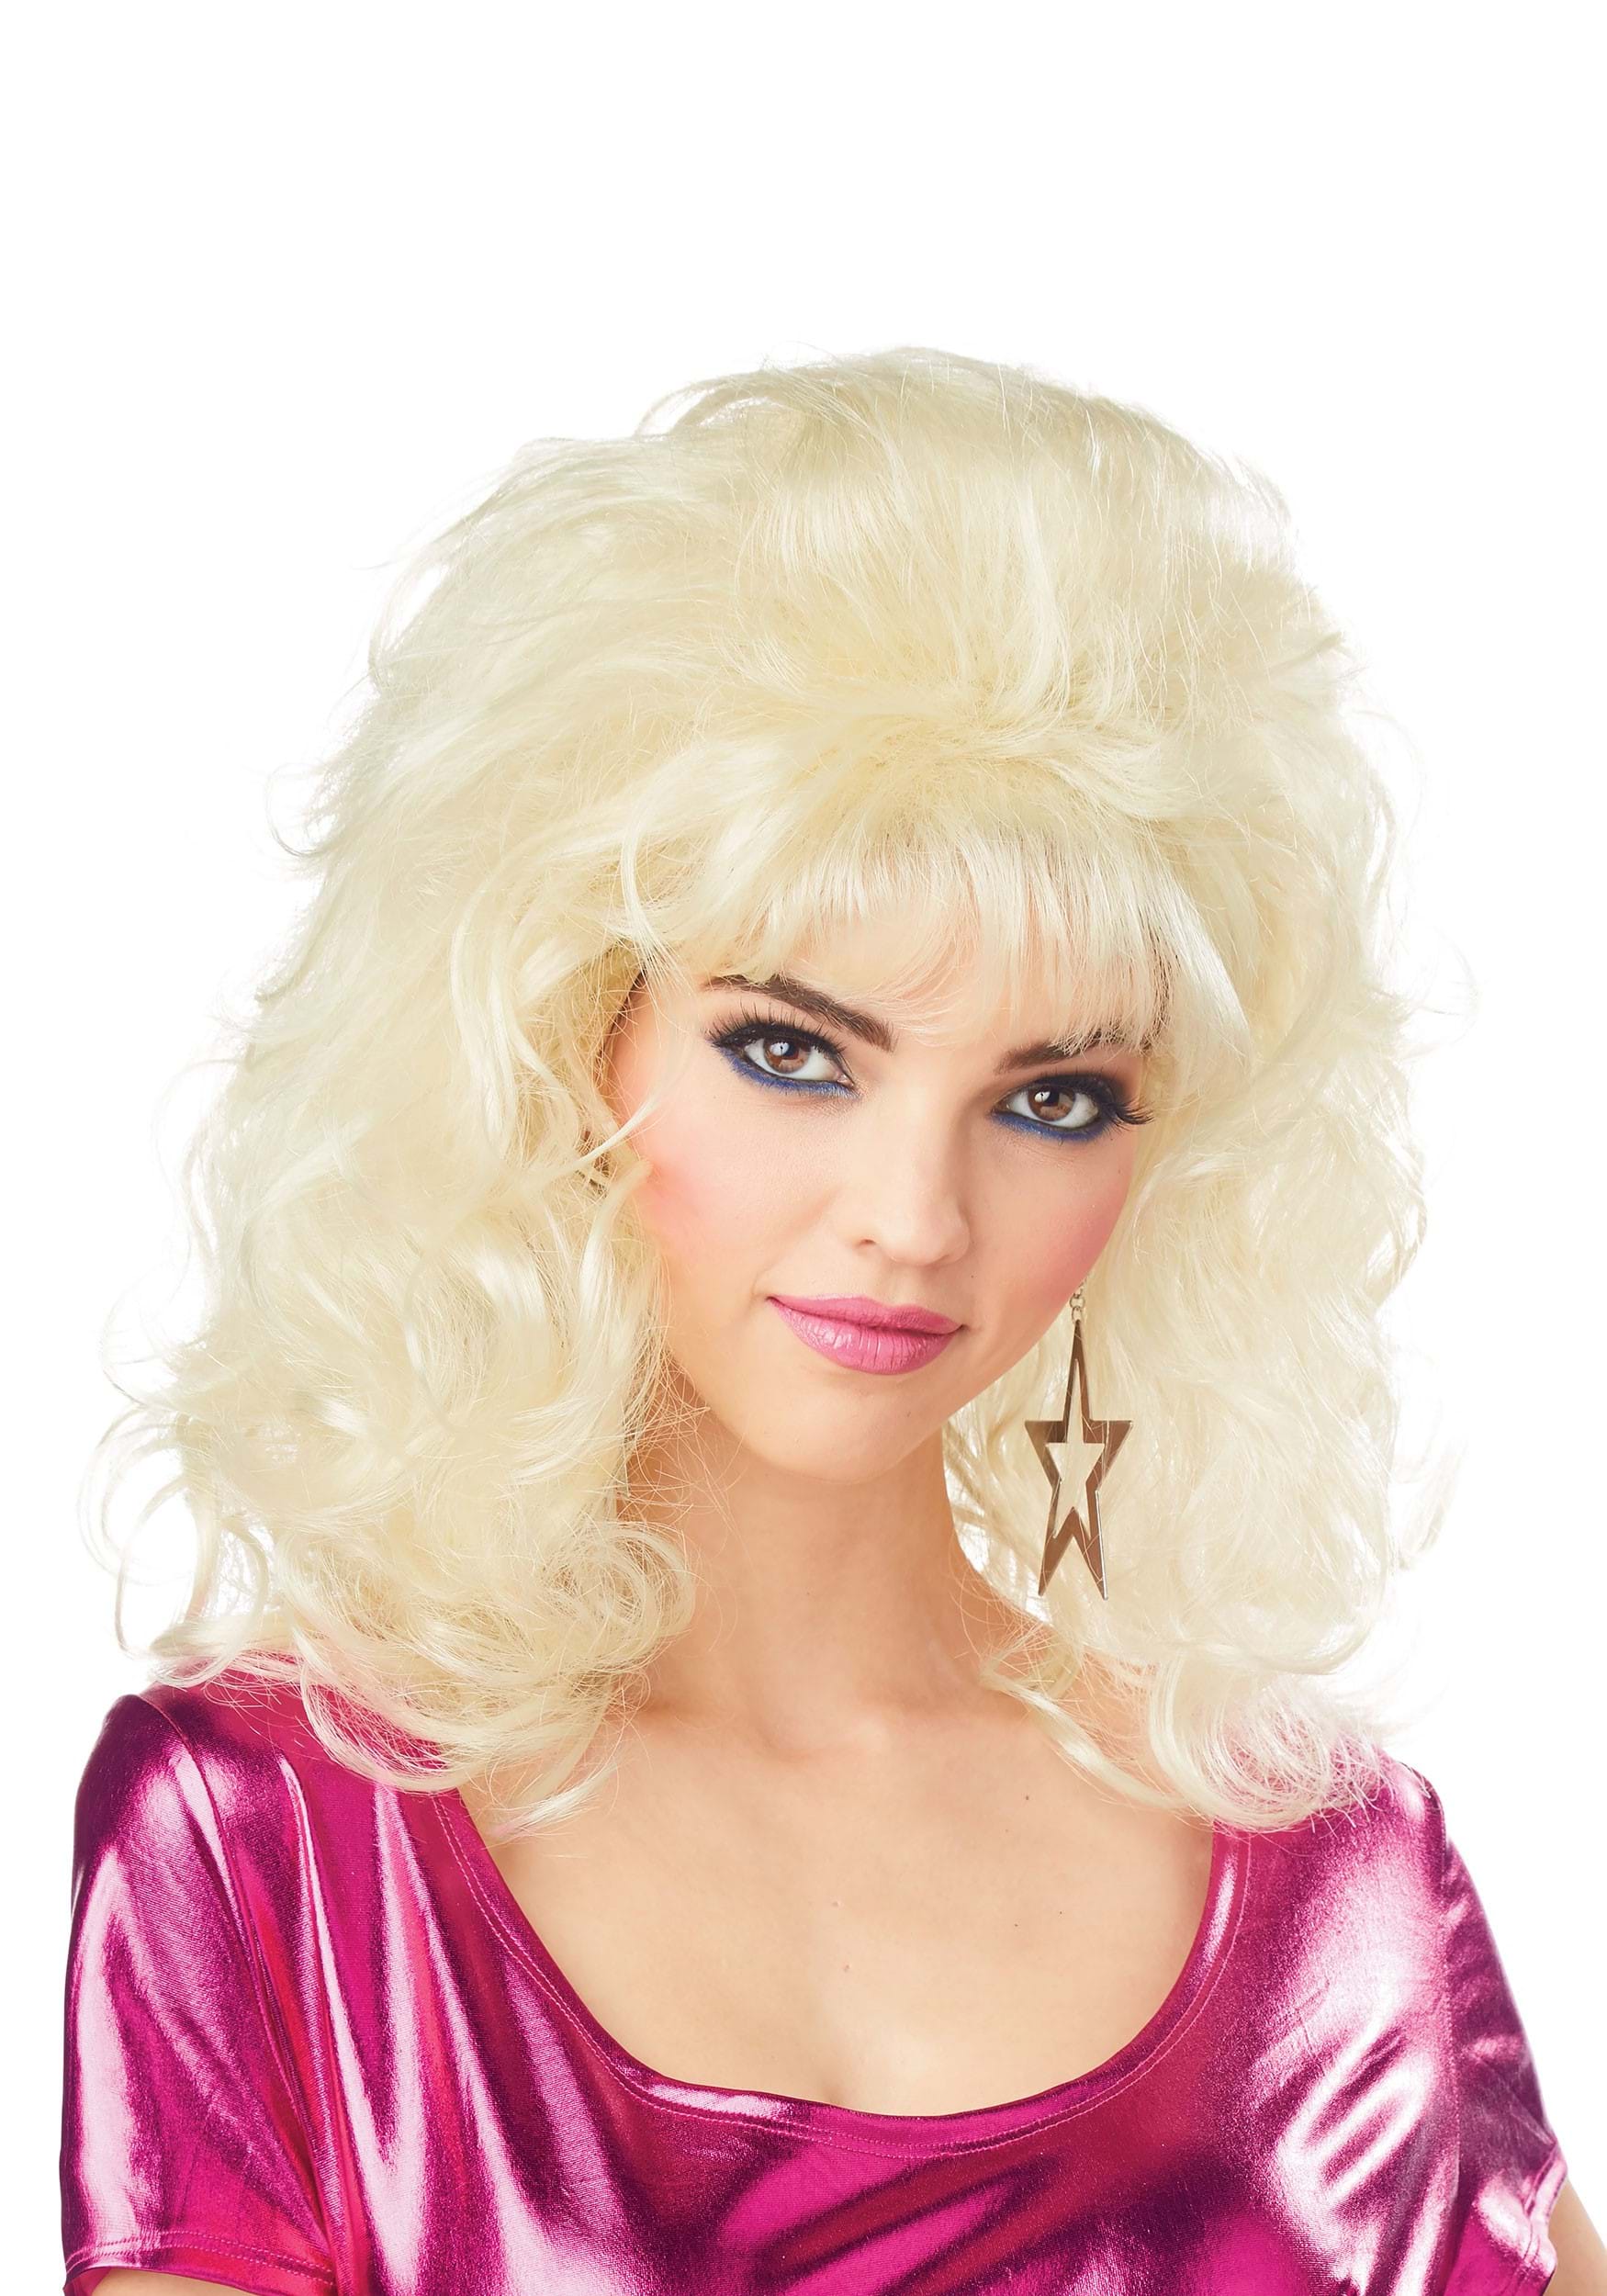 Women's 80's Big Hair Blonde Wig